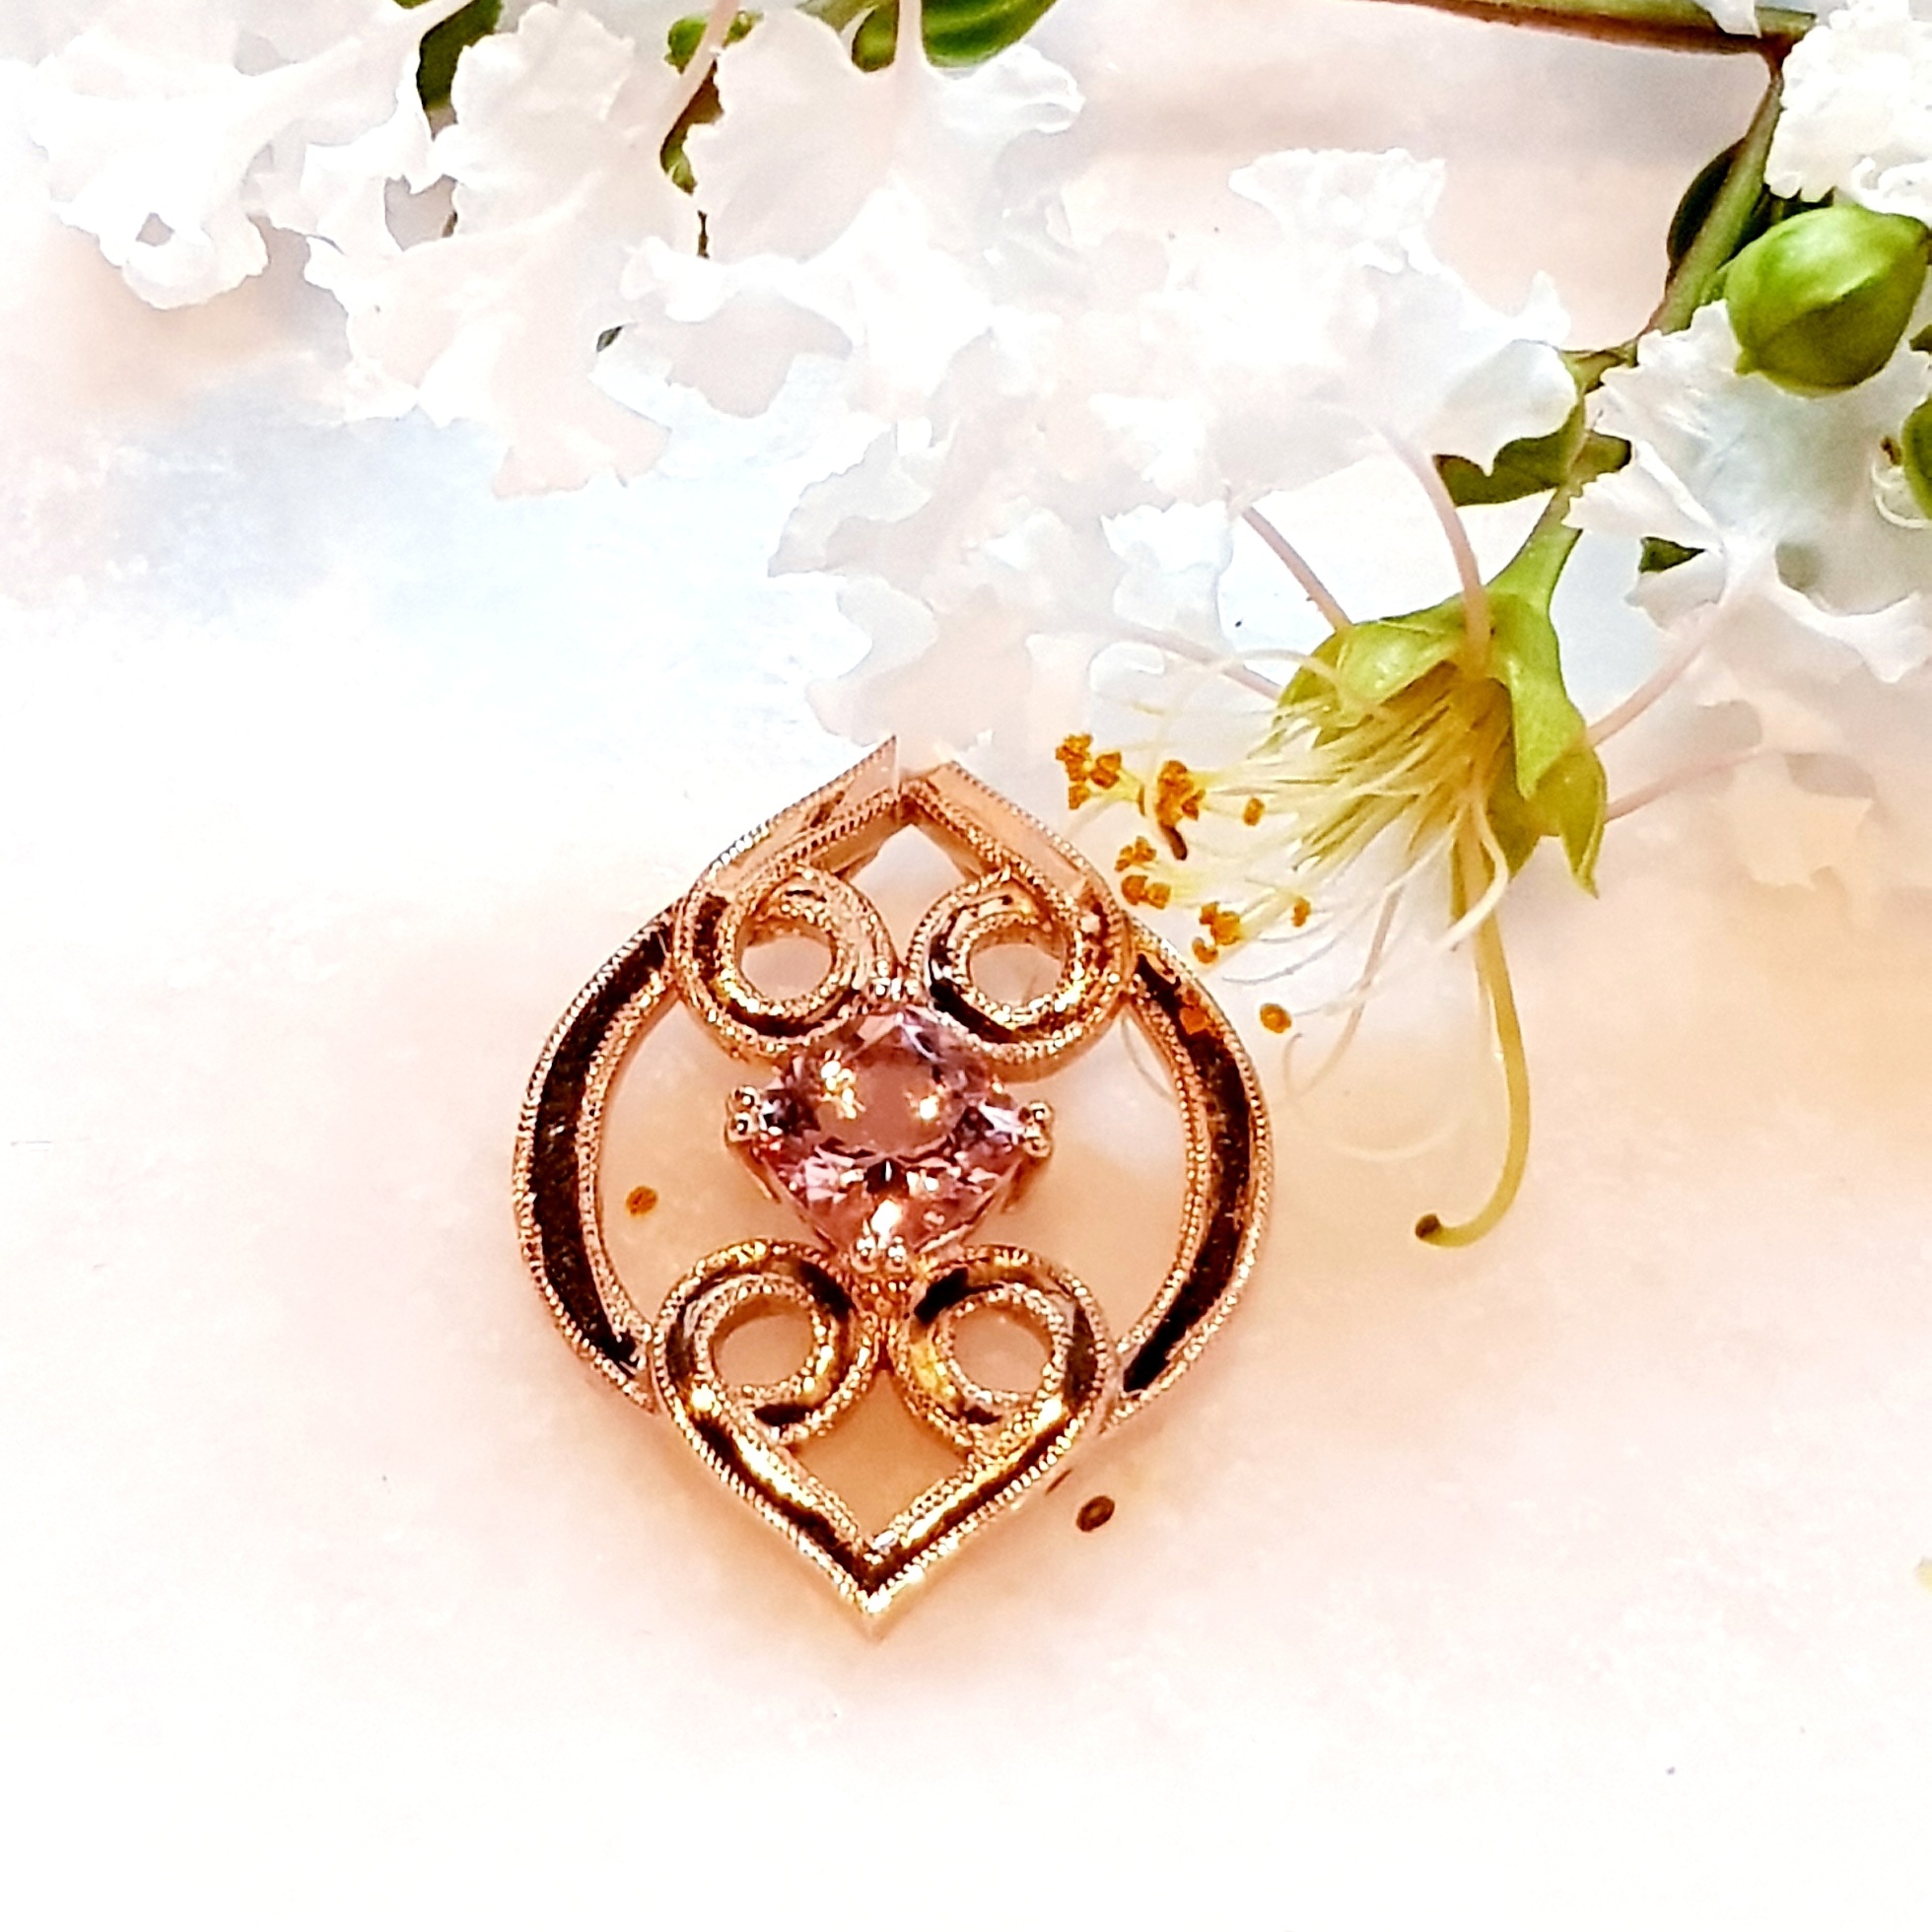 Rose Gold Celtic Heart Inspired Slider Pendant set with Pink Cushion Cut Morganite elegant mill grain border. Custom Made Bespoke jewellery by House of Frost